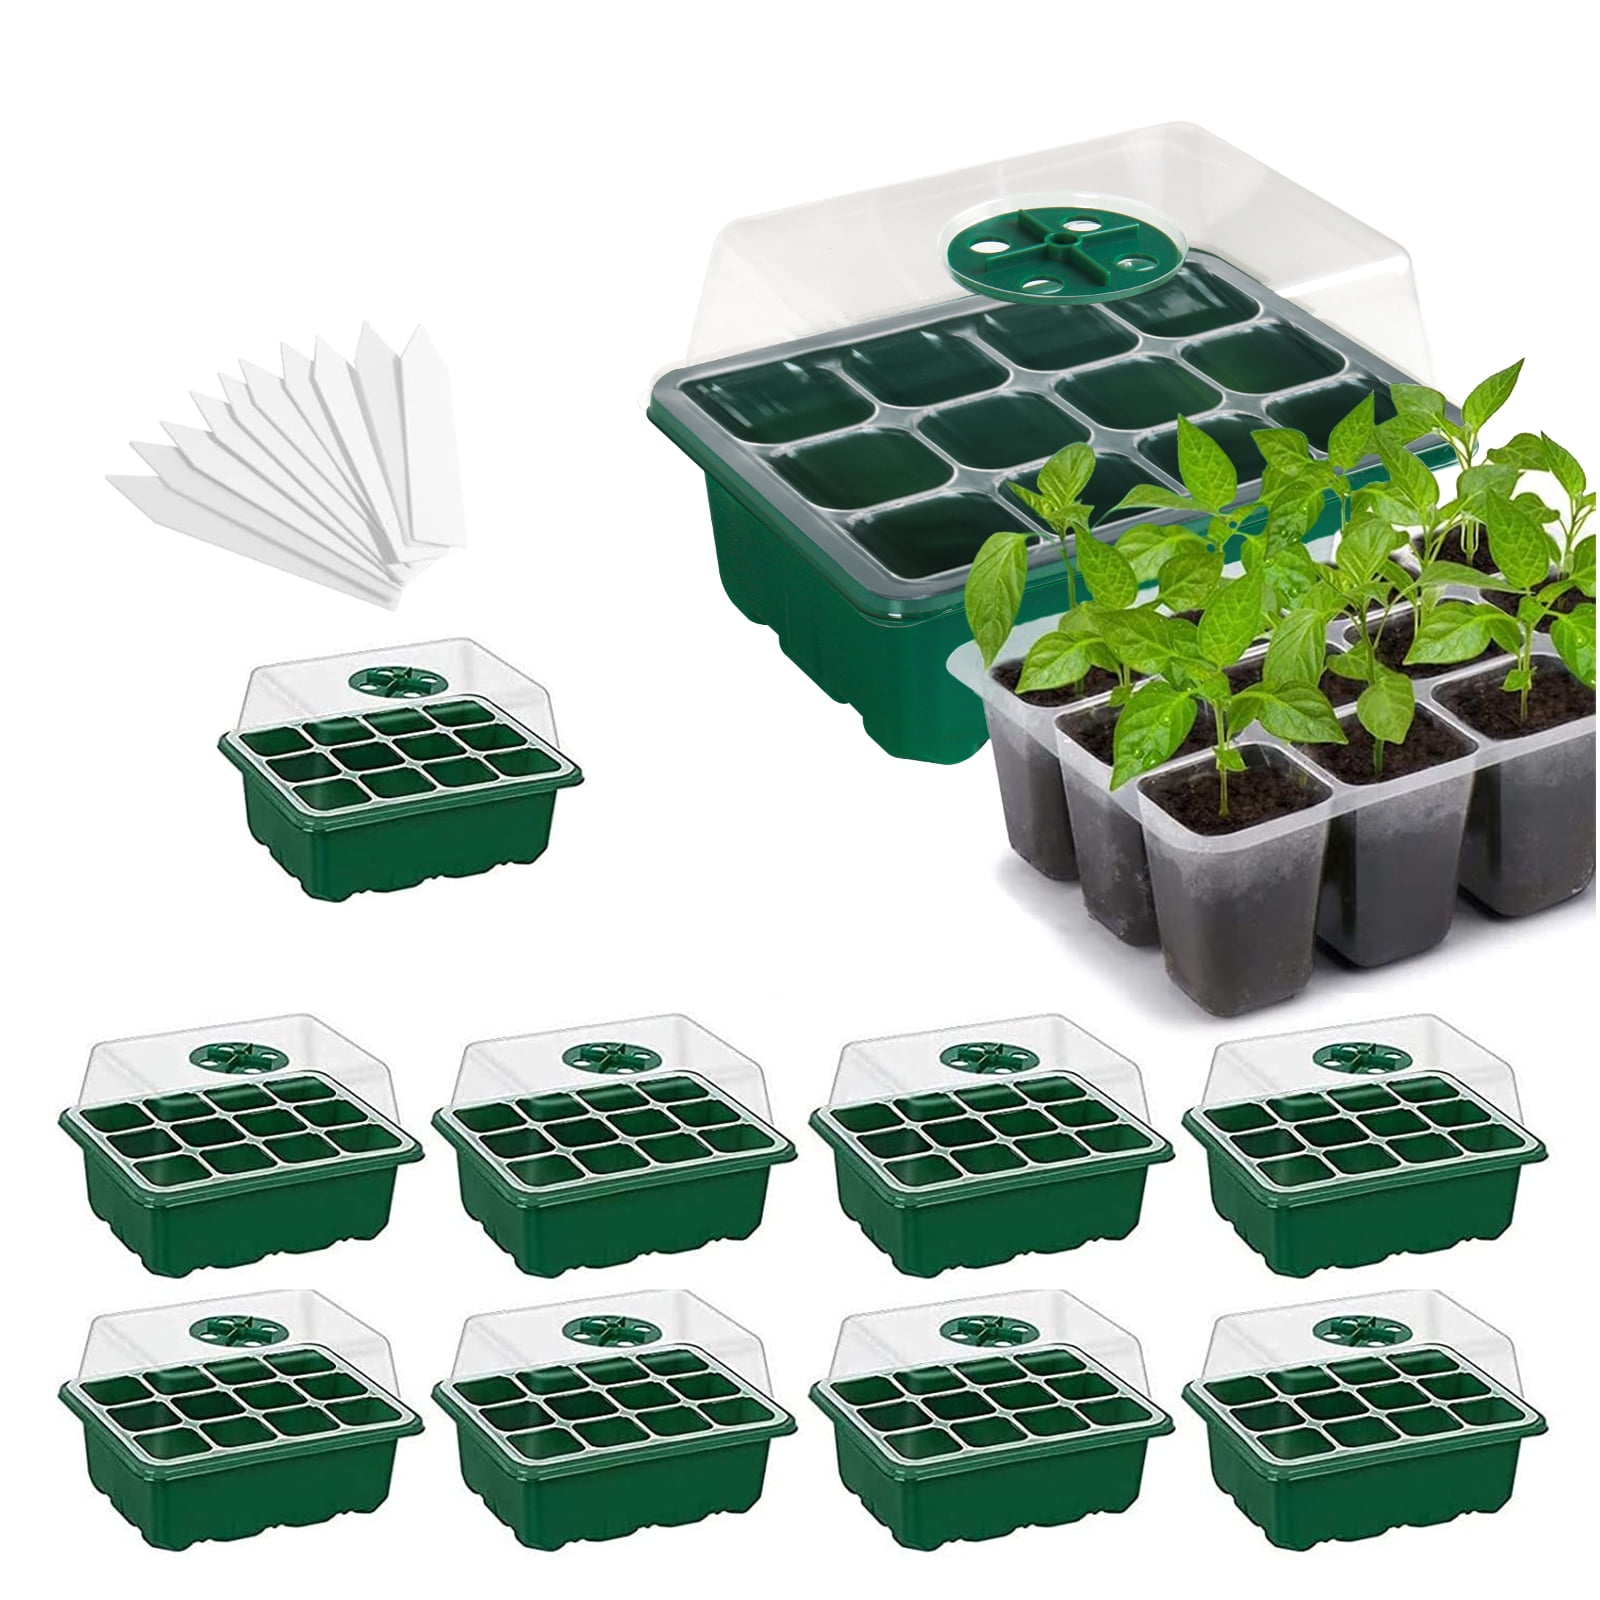  Juzanl 10-Pack Seed Starter Trays,15”x12” Plastic